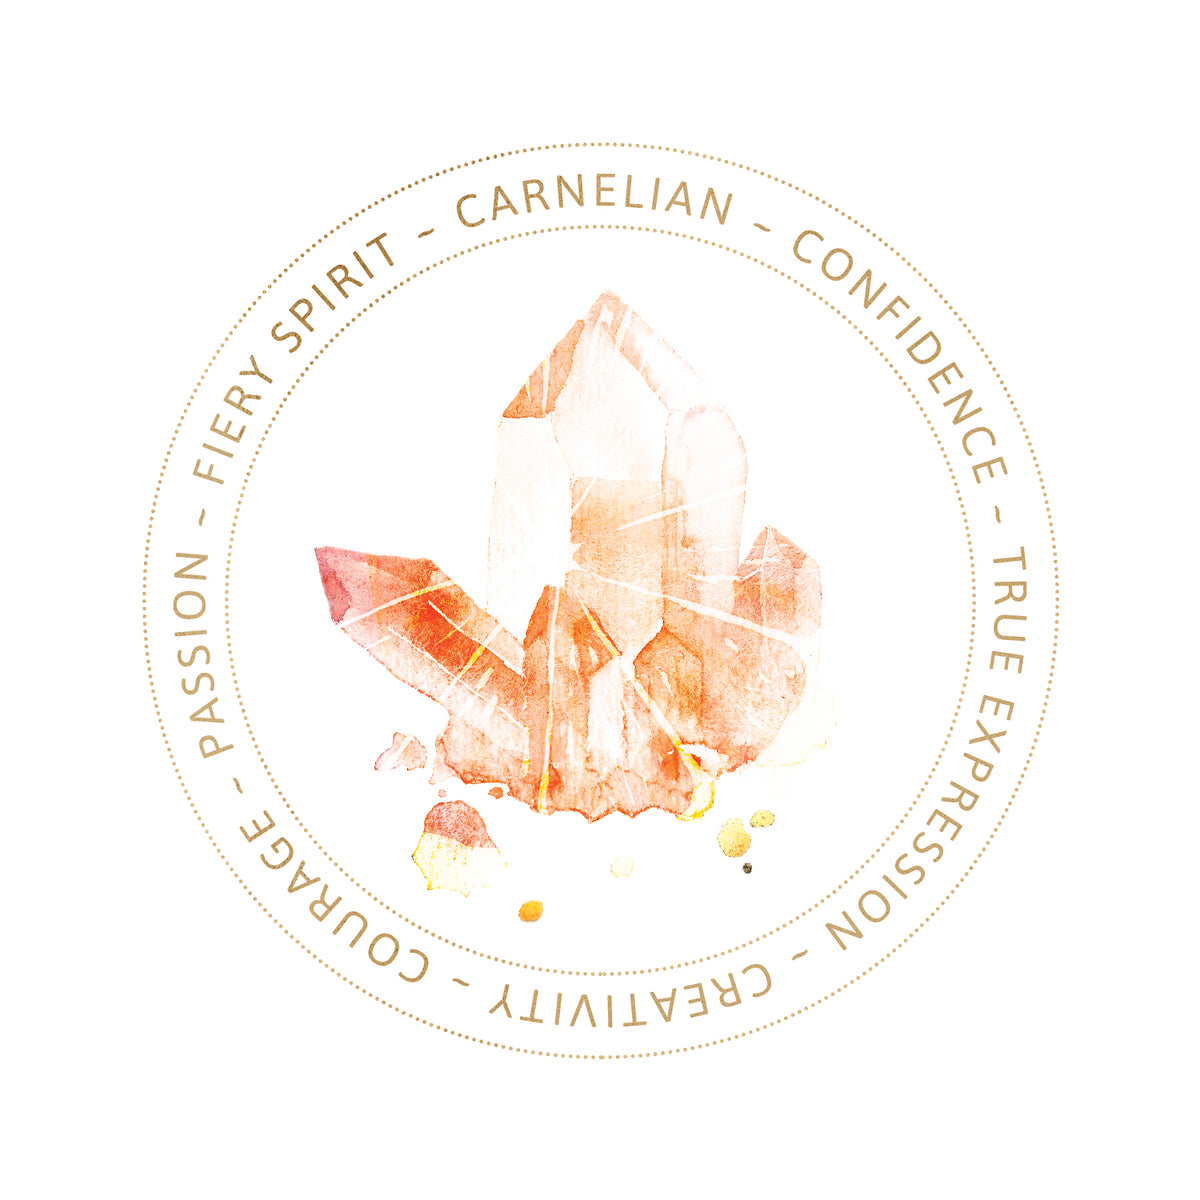 Carnelian tumbled (10 pack)